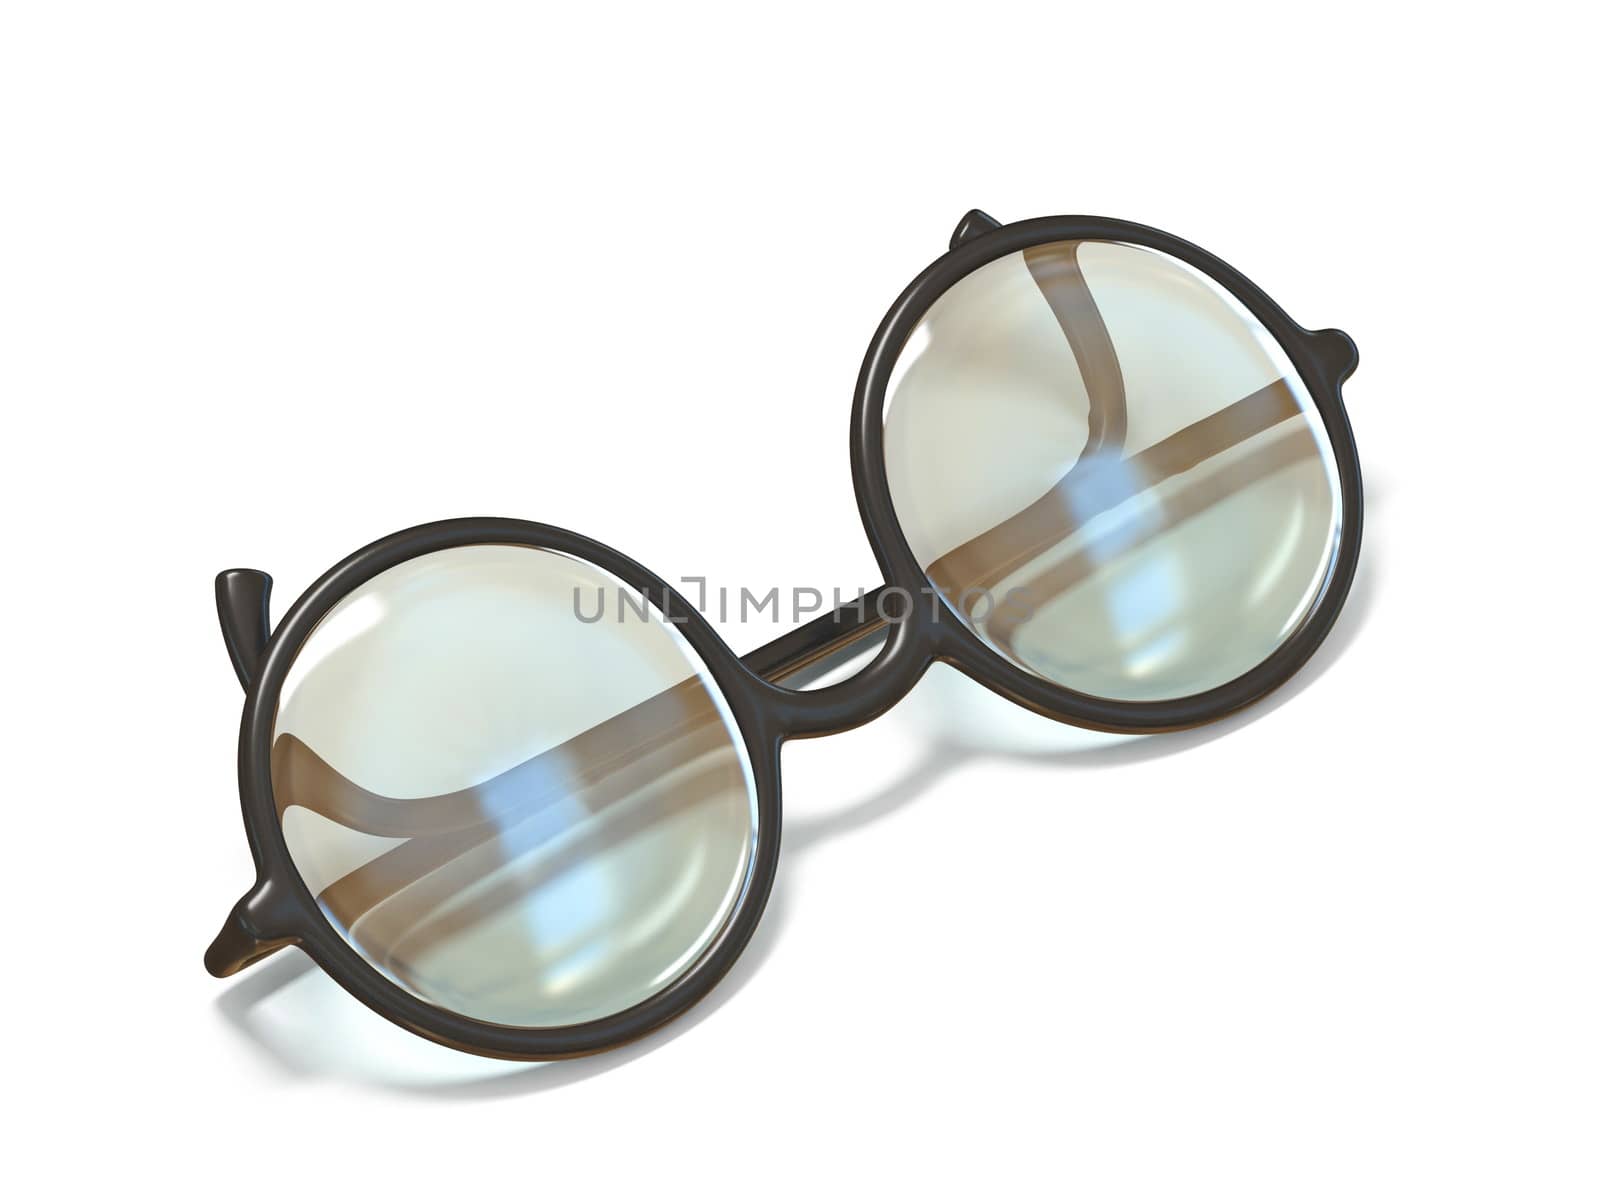 Retro eyeglasses 3D render illustration isolated on white background